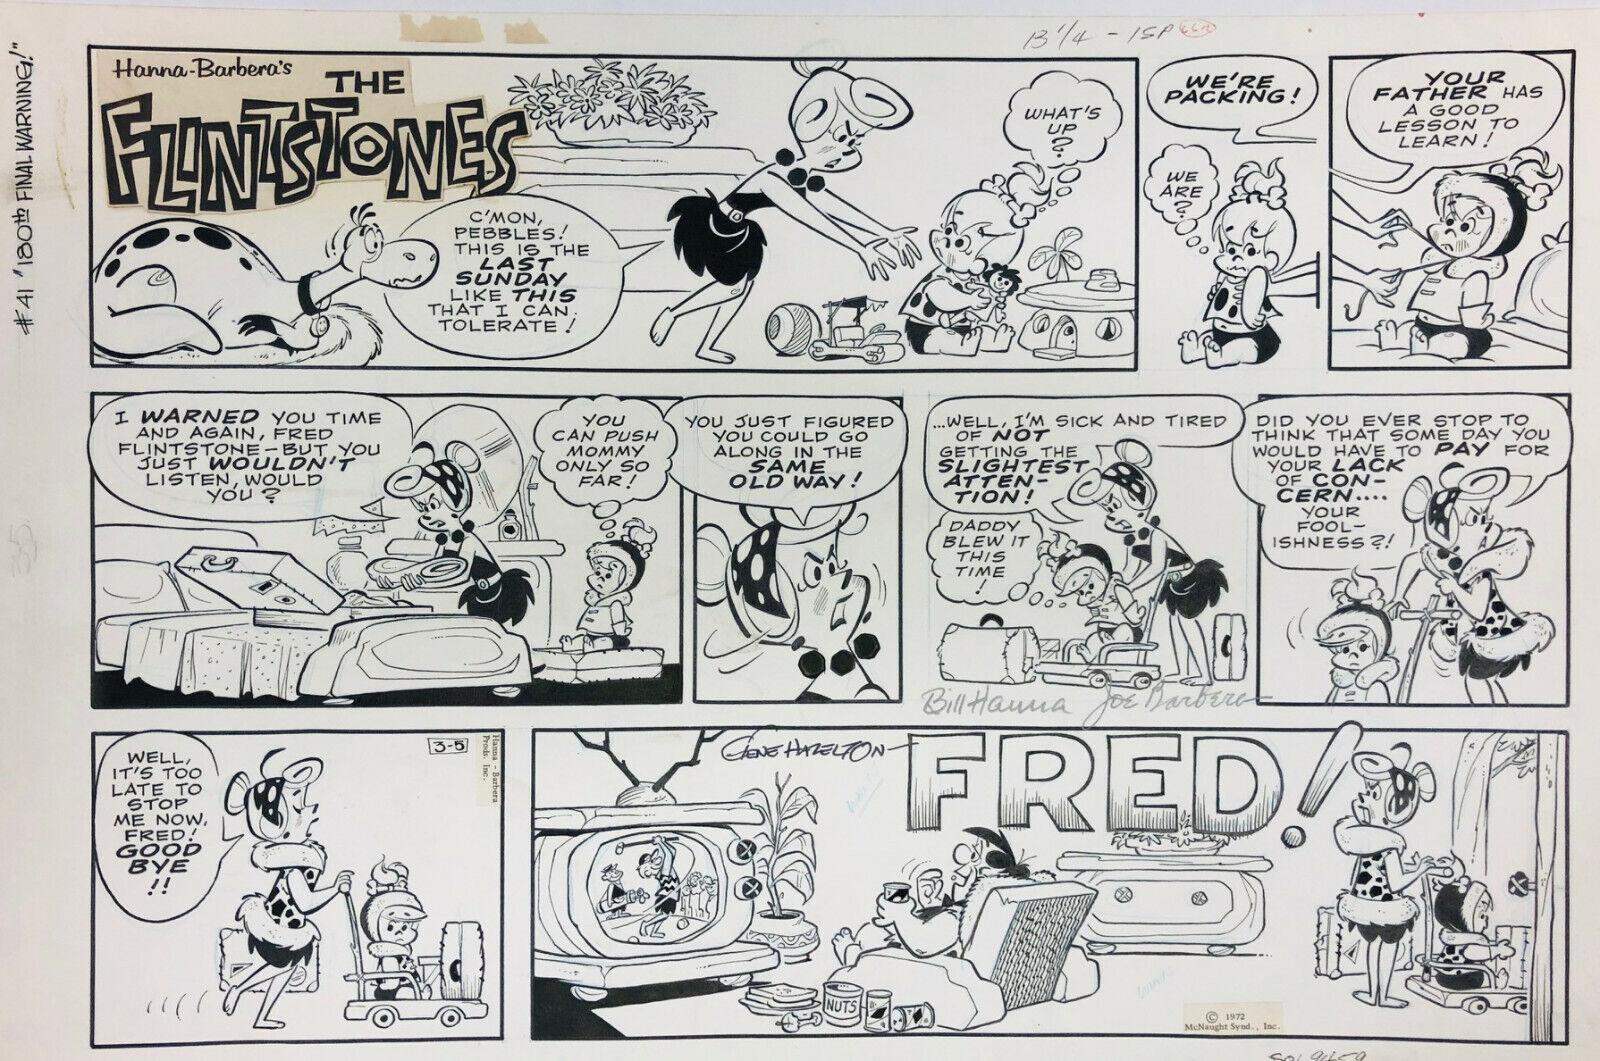 Original Syndicated Flintstone Comic Strip Signed By Hanna and Barbera - Art by Joseph Barbera and William Hanna